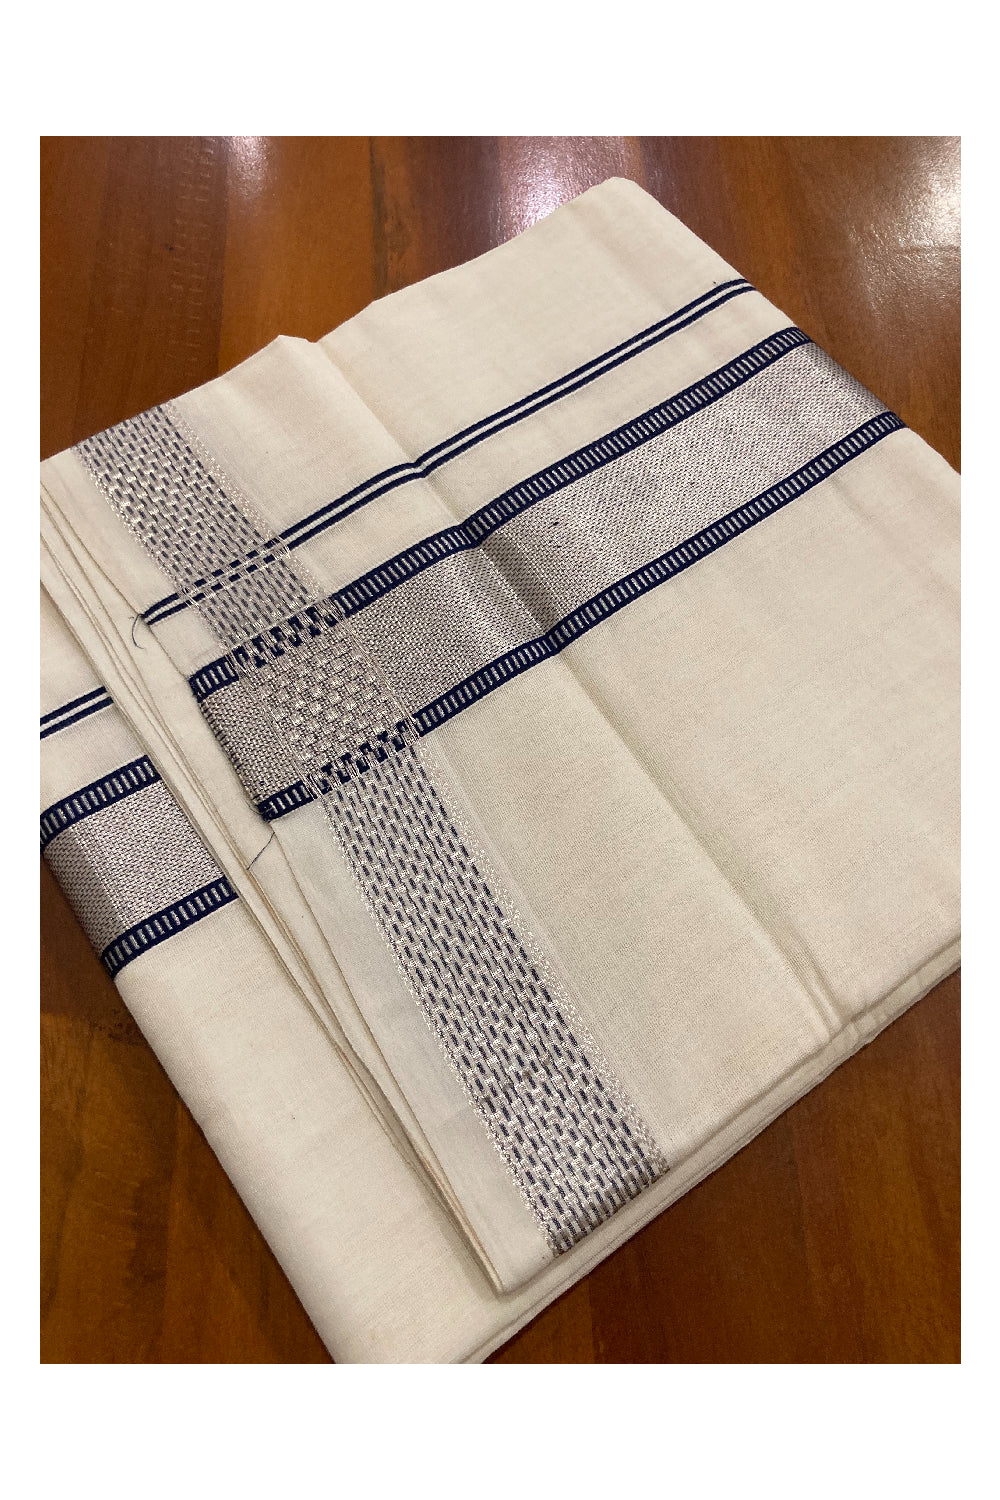 Southloom Premium Handloom Pure Cotton Mundu with Silver Kasavu and Navy Blue Design Border (South Indian Dhoti)